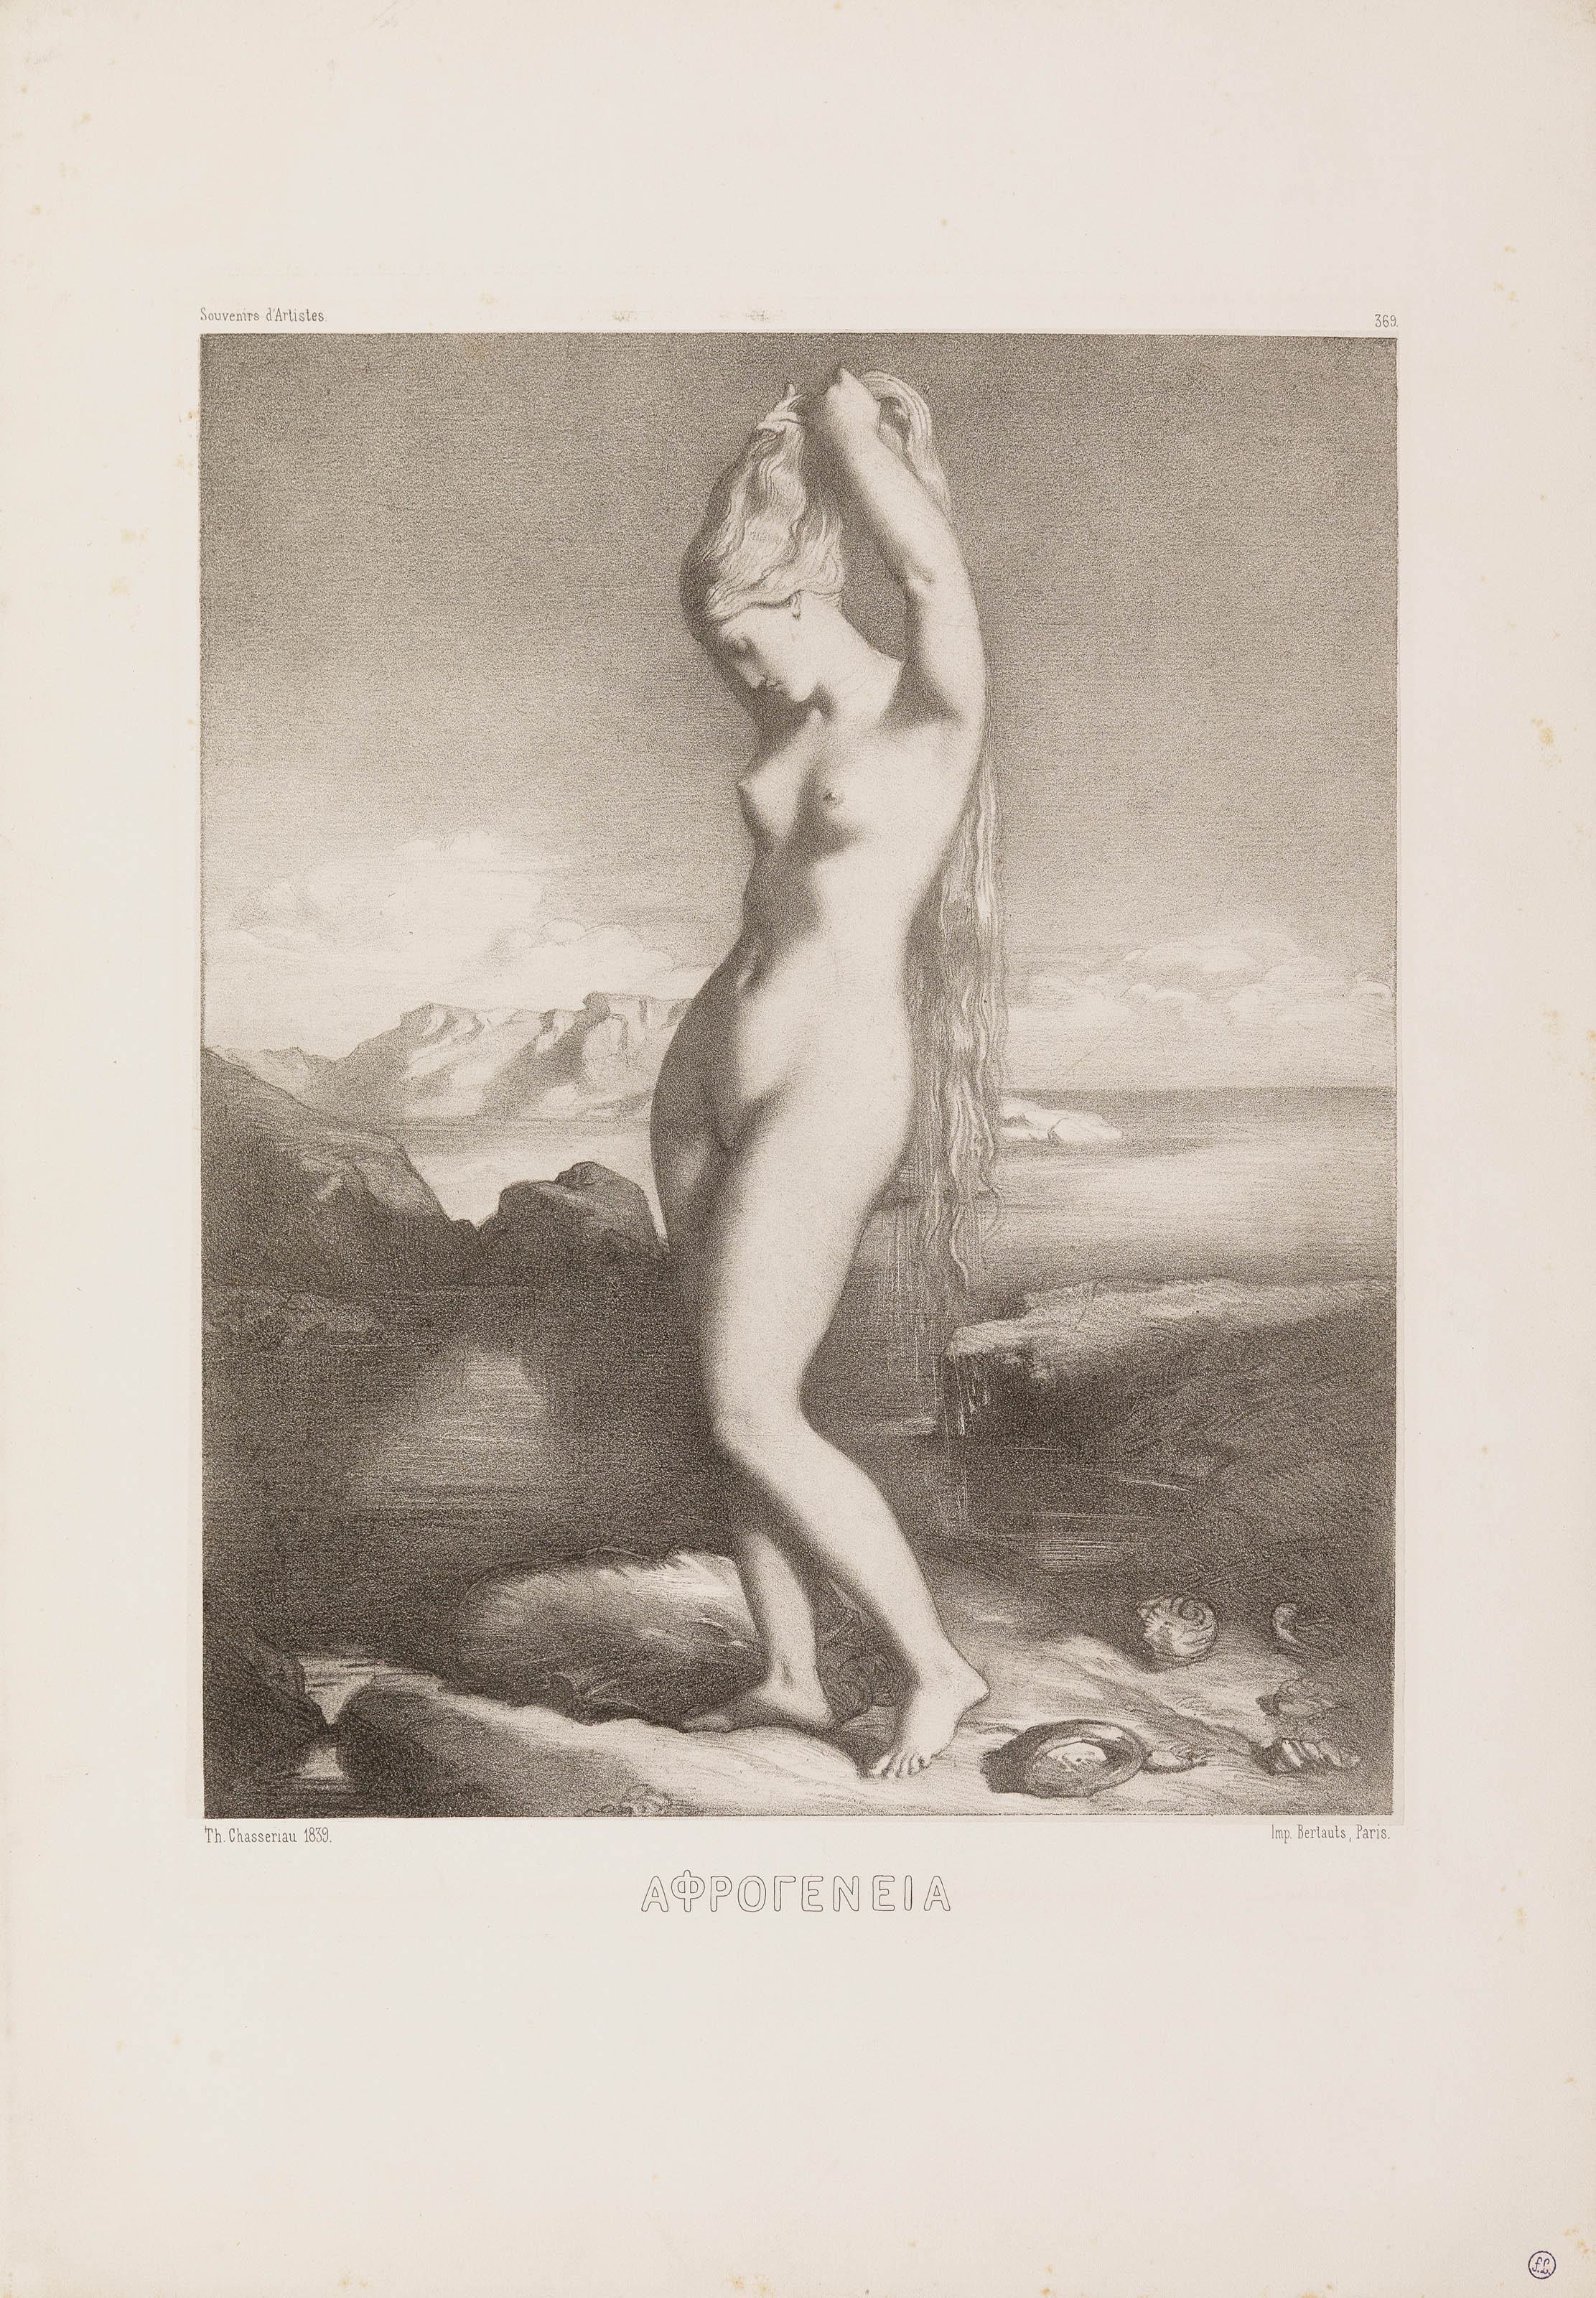 Thodore Chassriau, Vnus Anadyomne, circa 1841-1842, lithograph